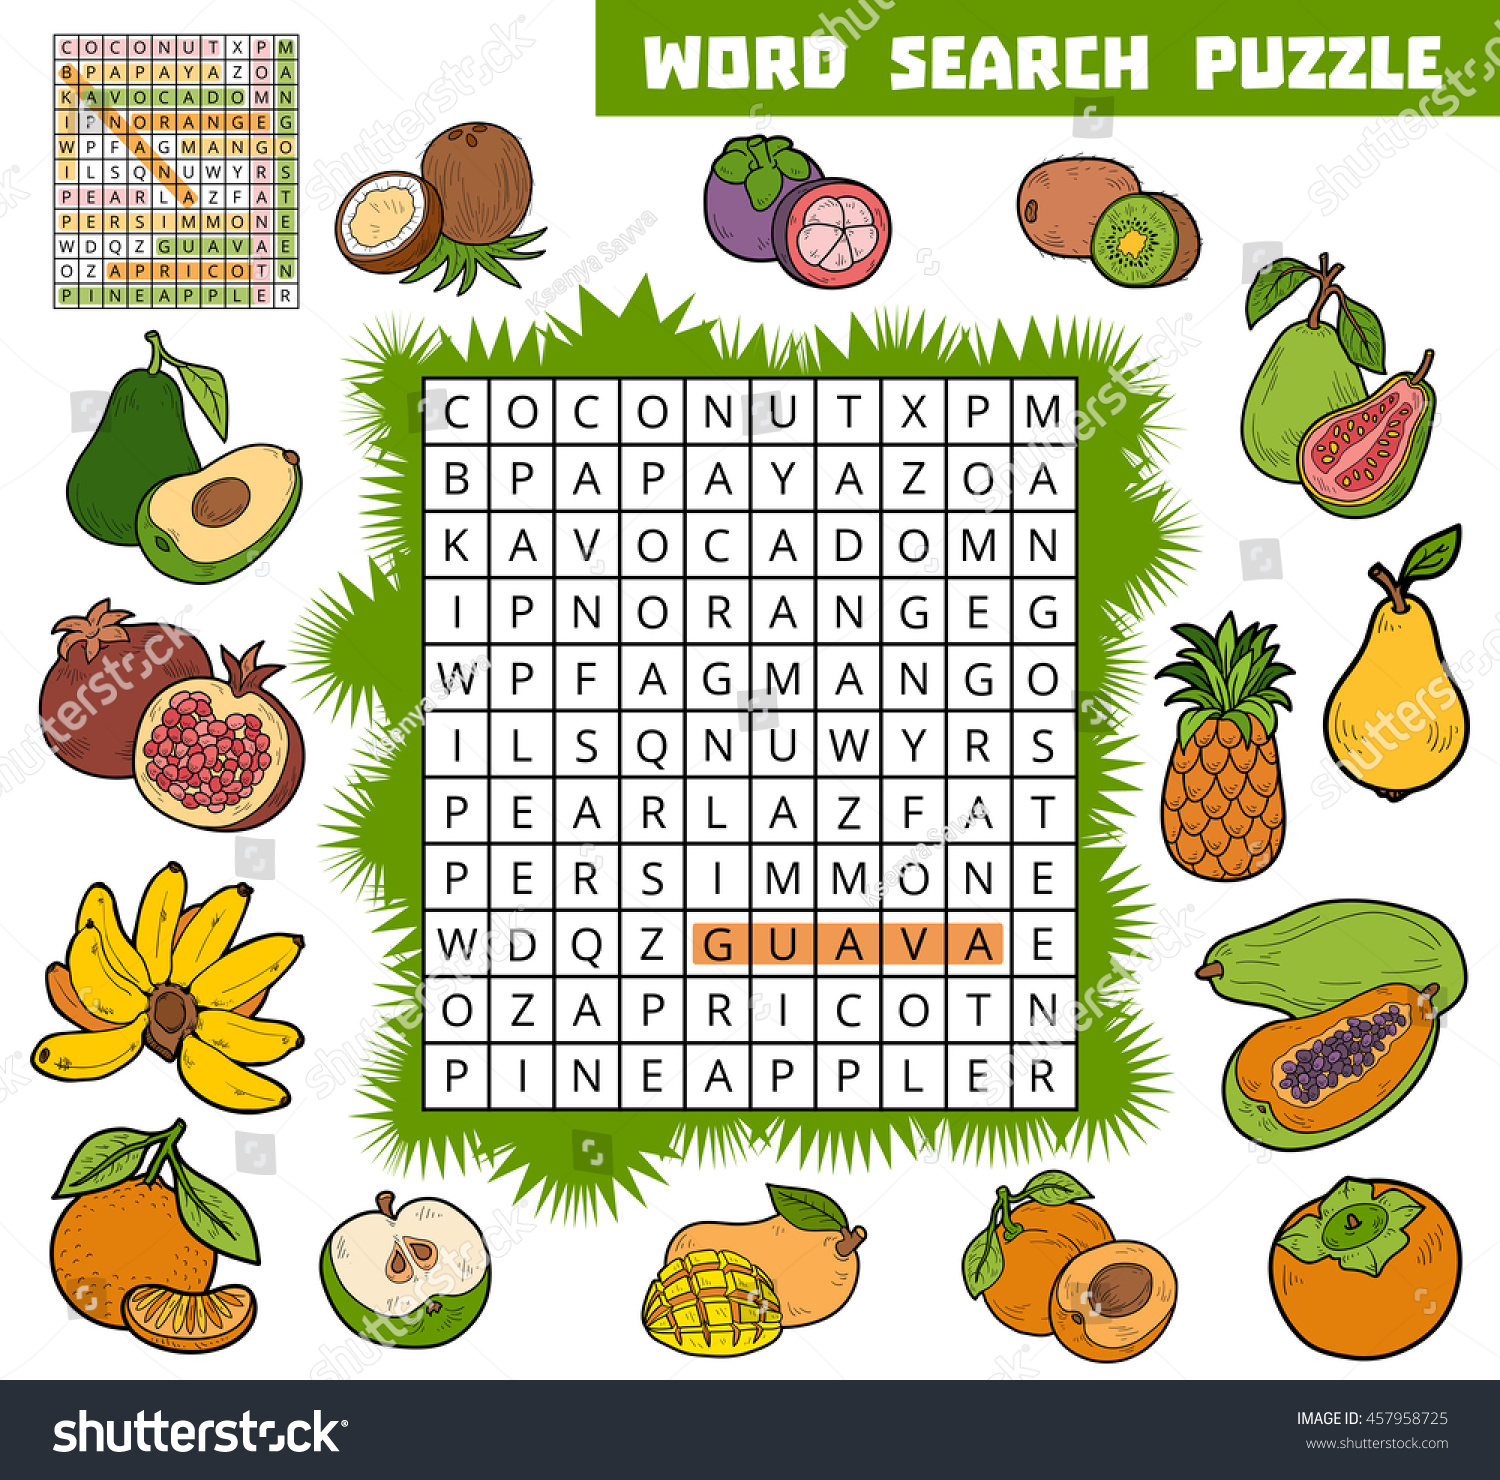 Tropical fruit crossword clue